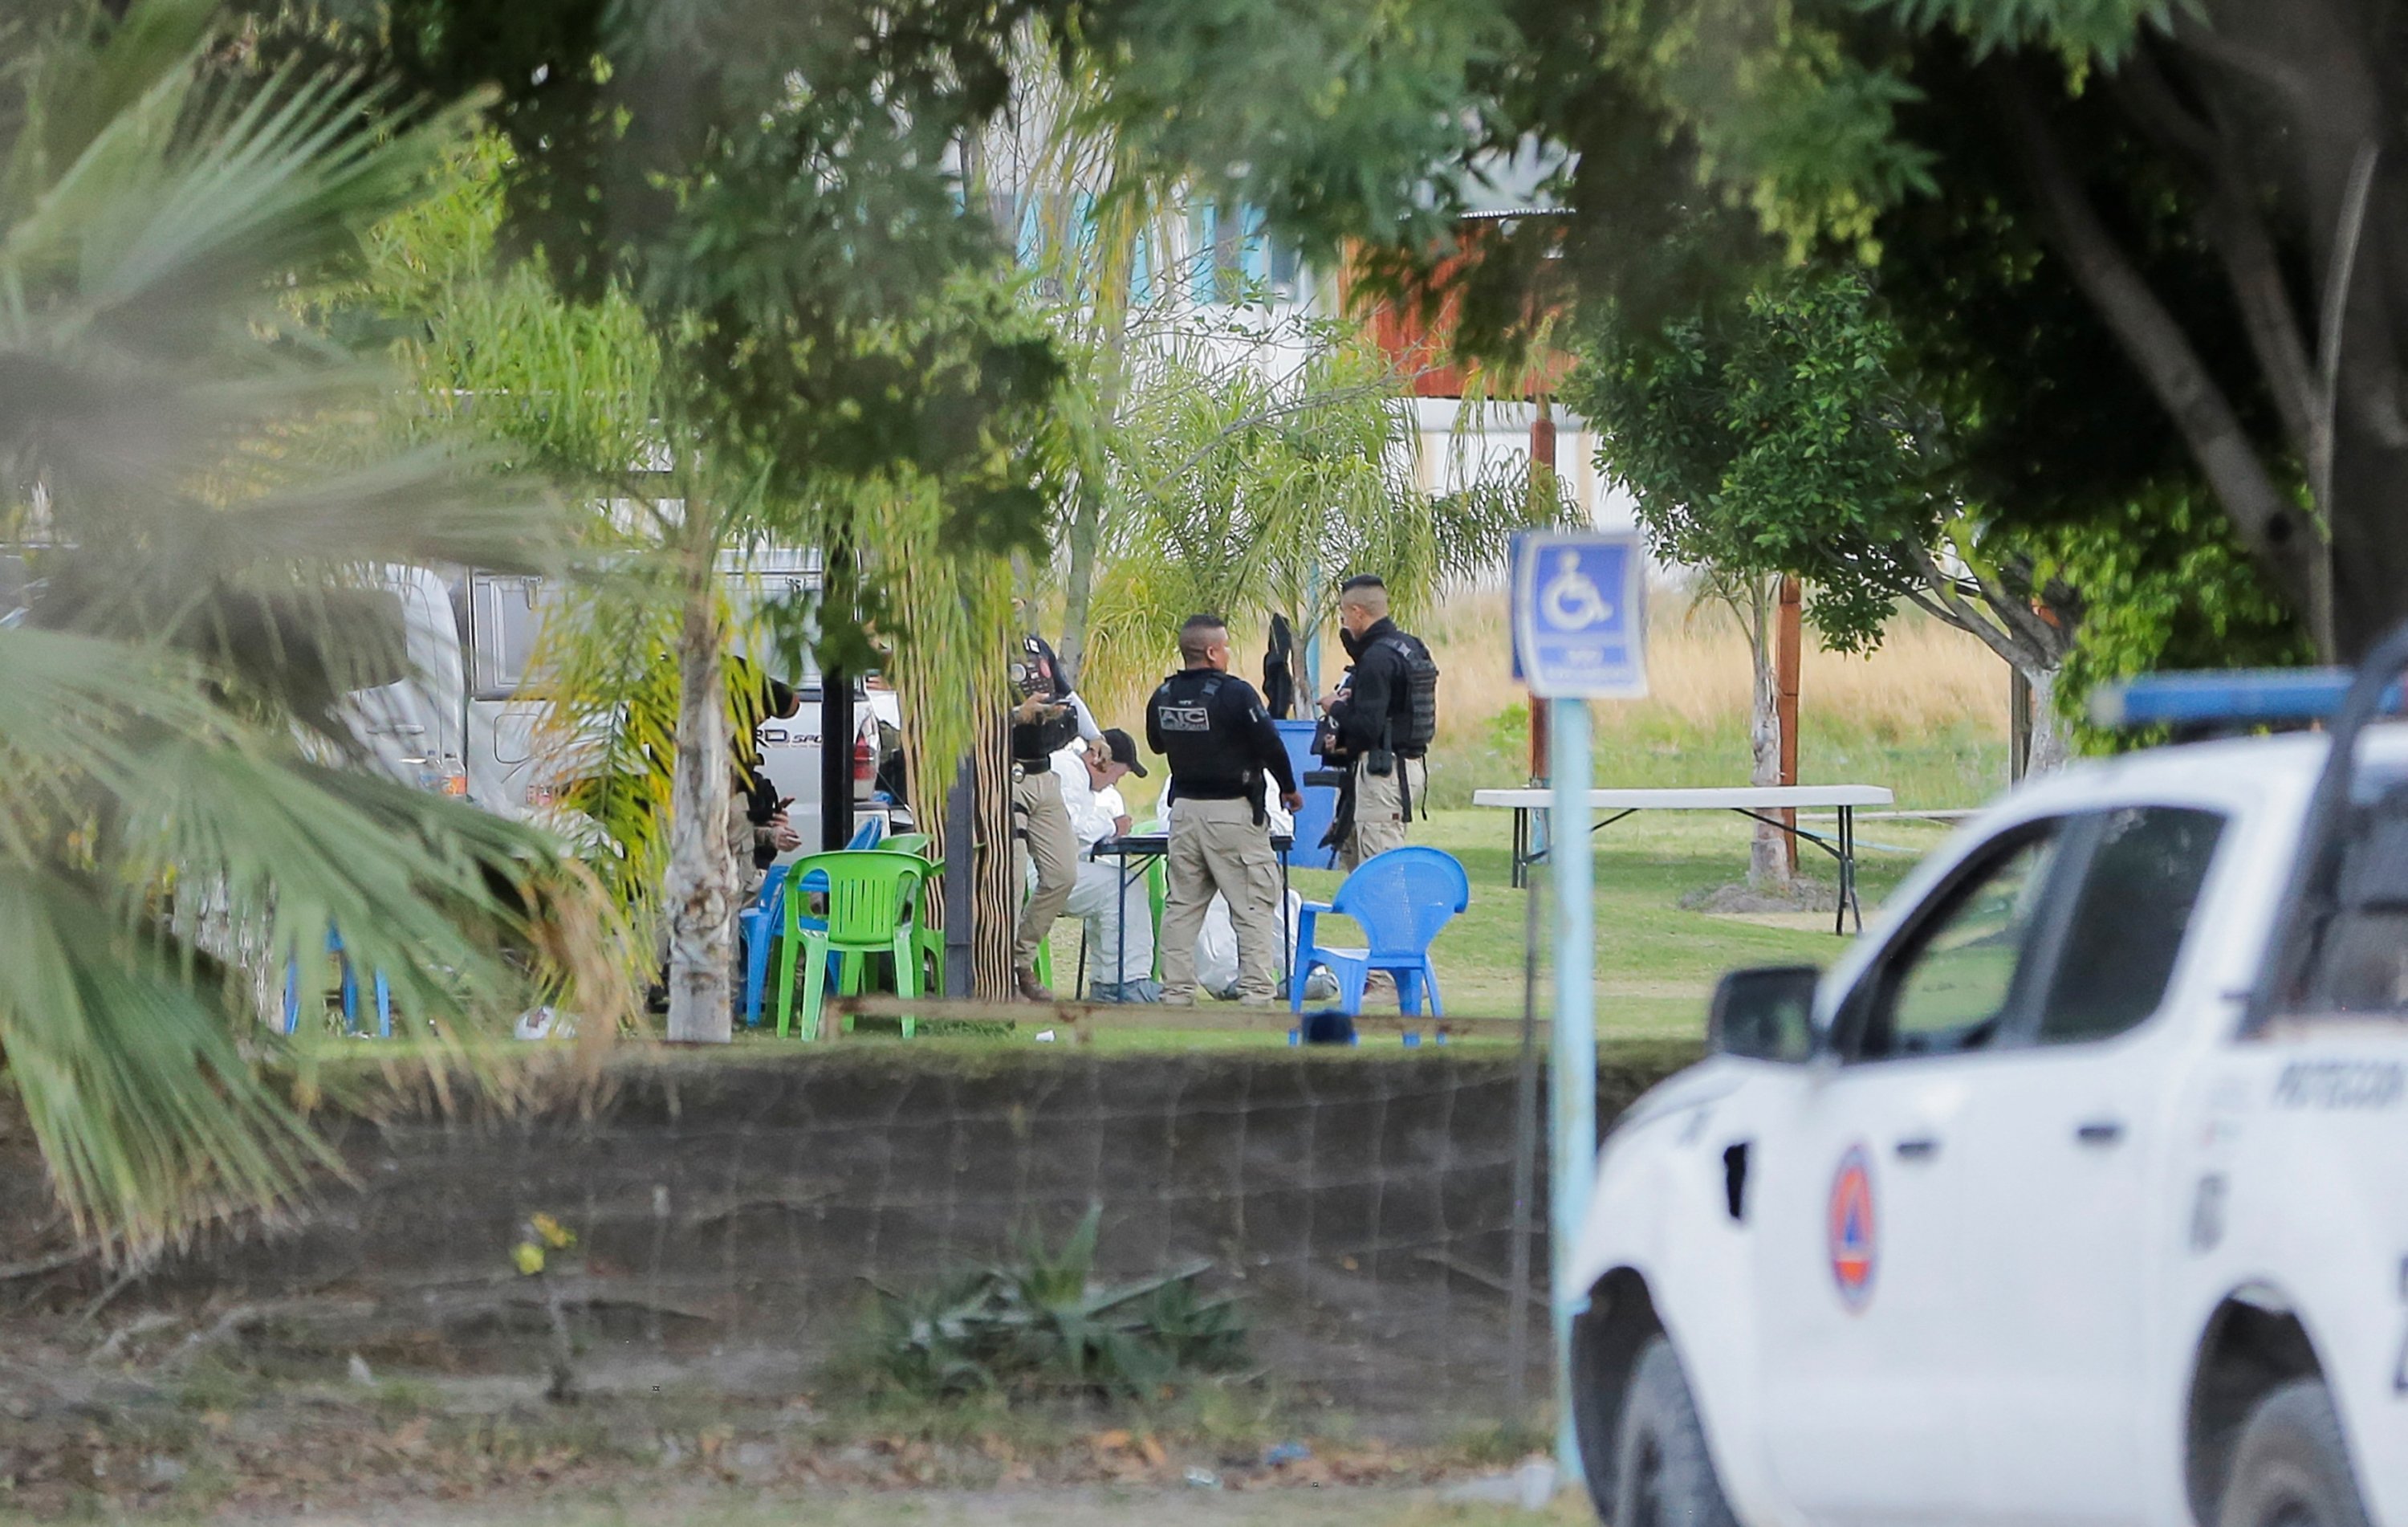 Child among 7 killed as gunmen shoot up central Mexico resort | Daily Sabah